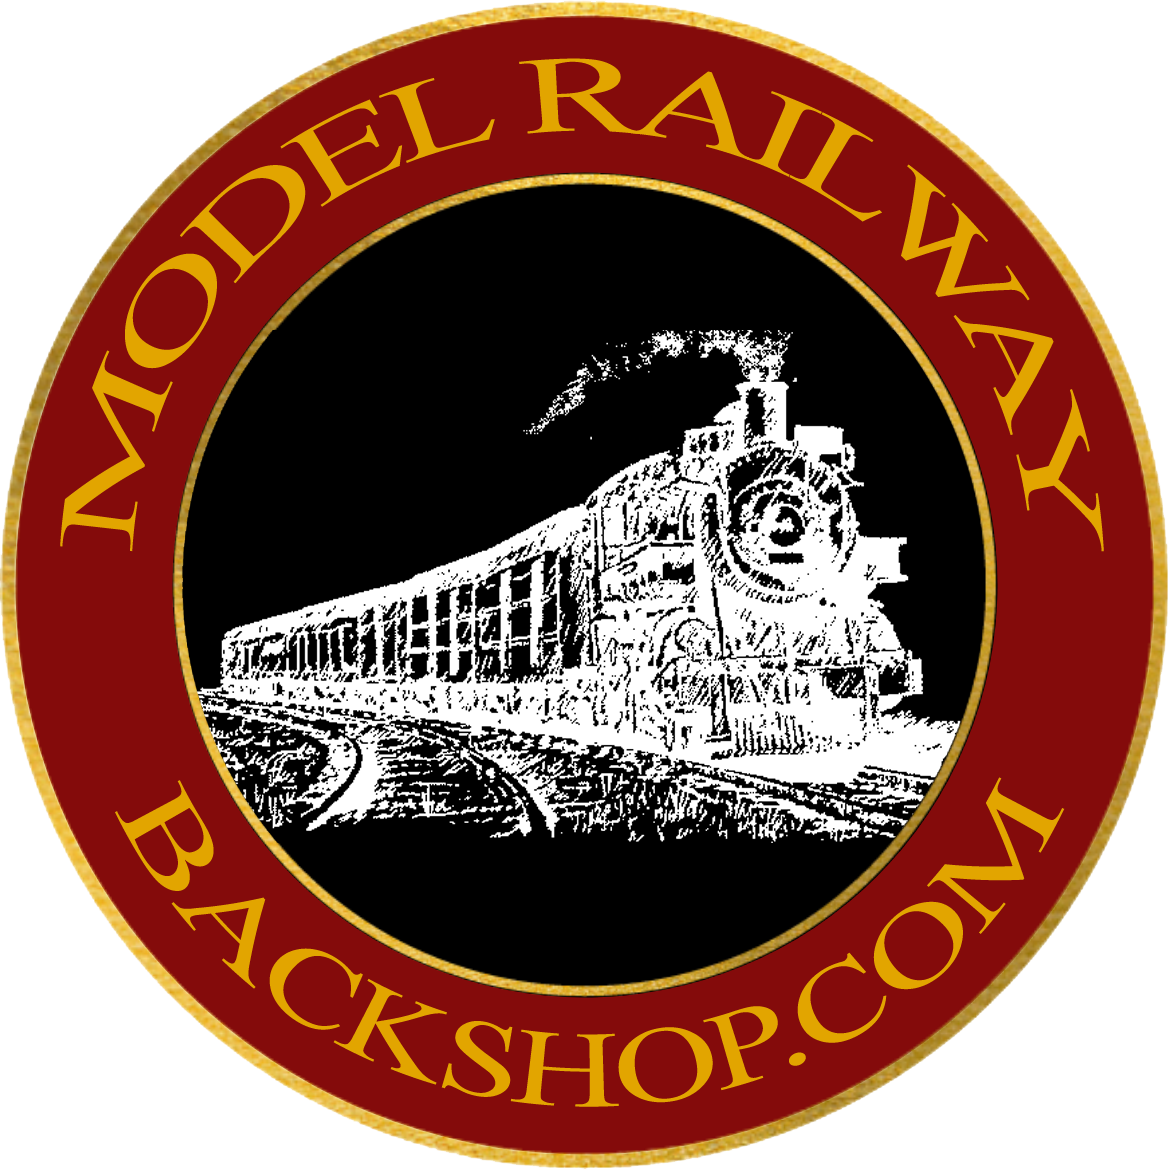 Model Railway Backshop